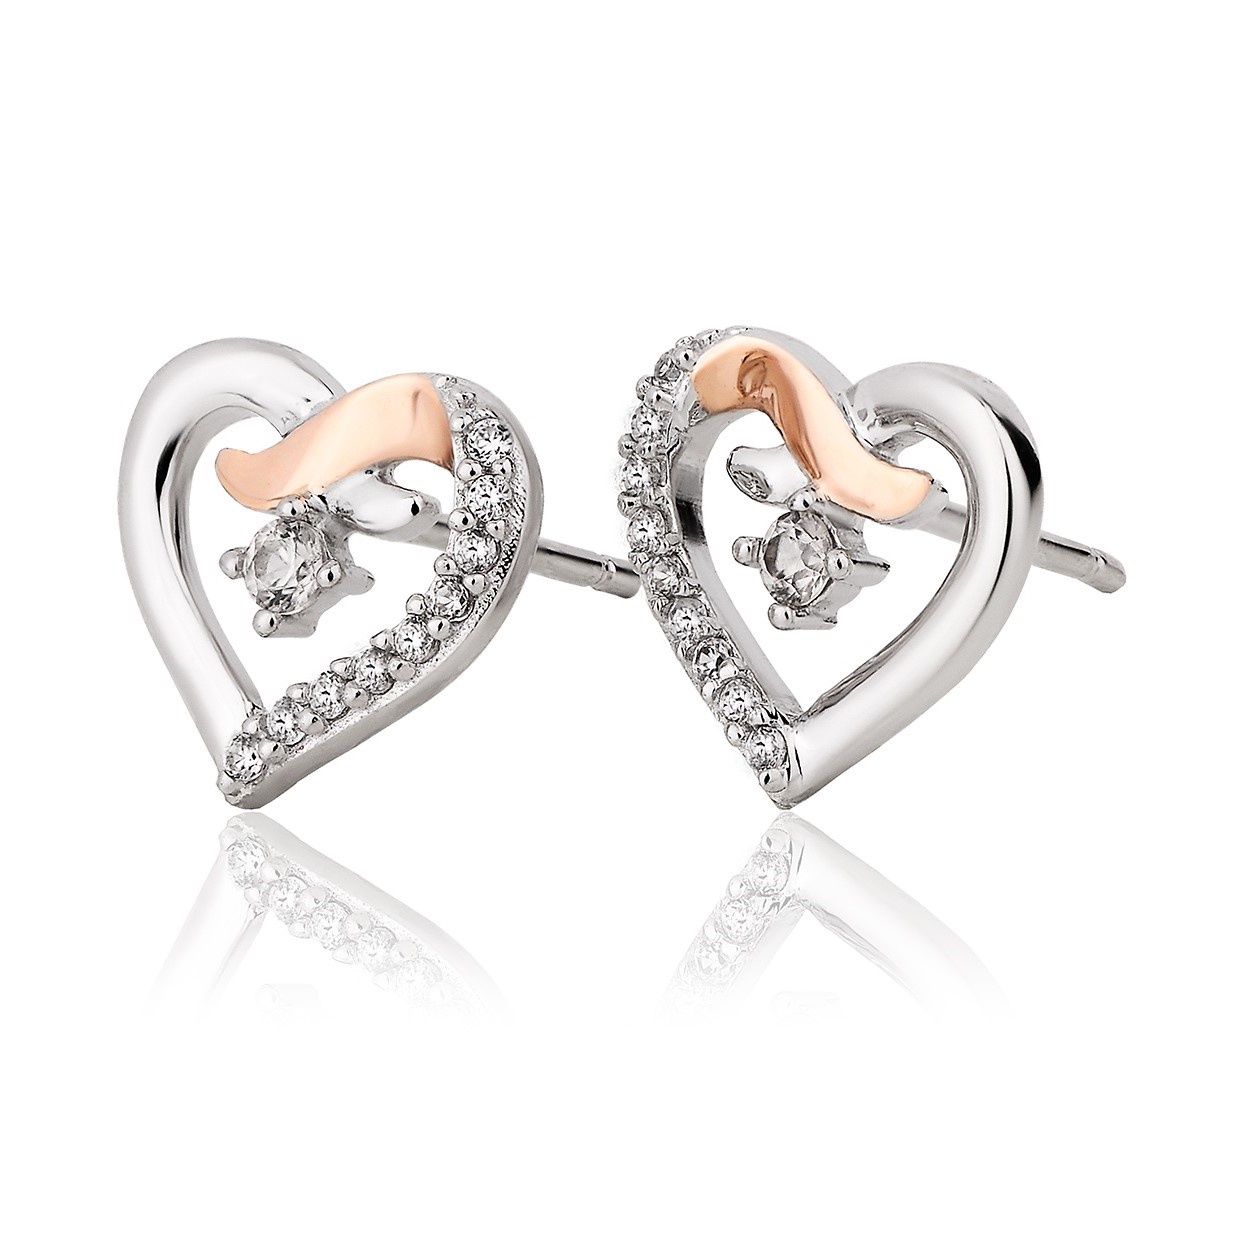 Buy Clogau Kiss White Topaz Heart Stud Earrings Online in UK